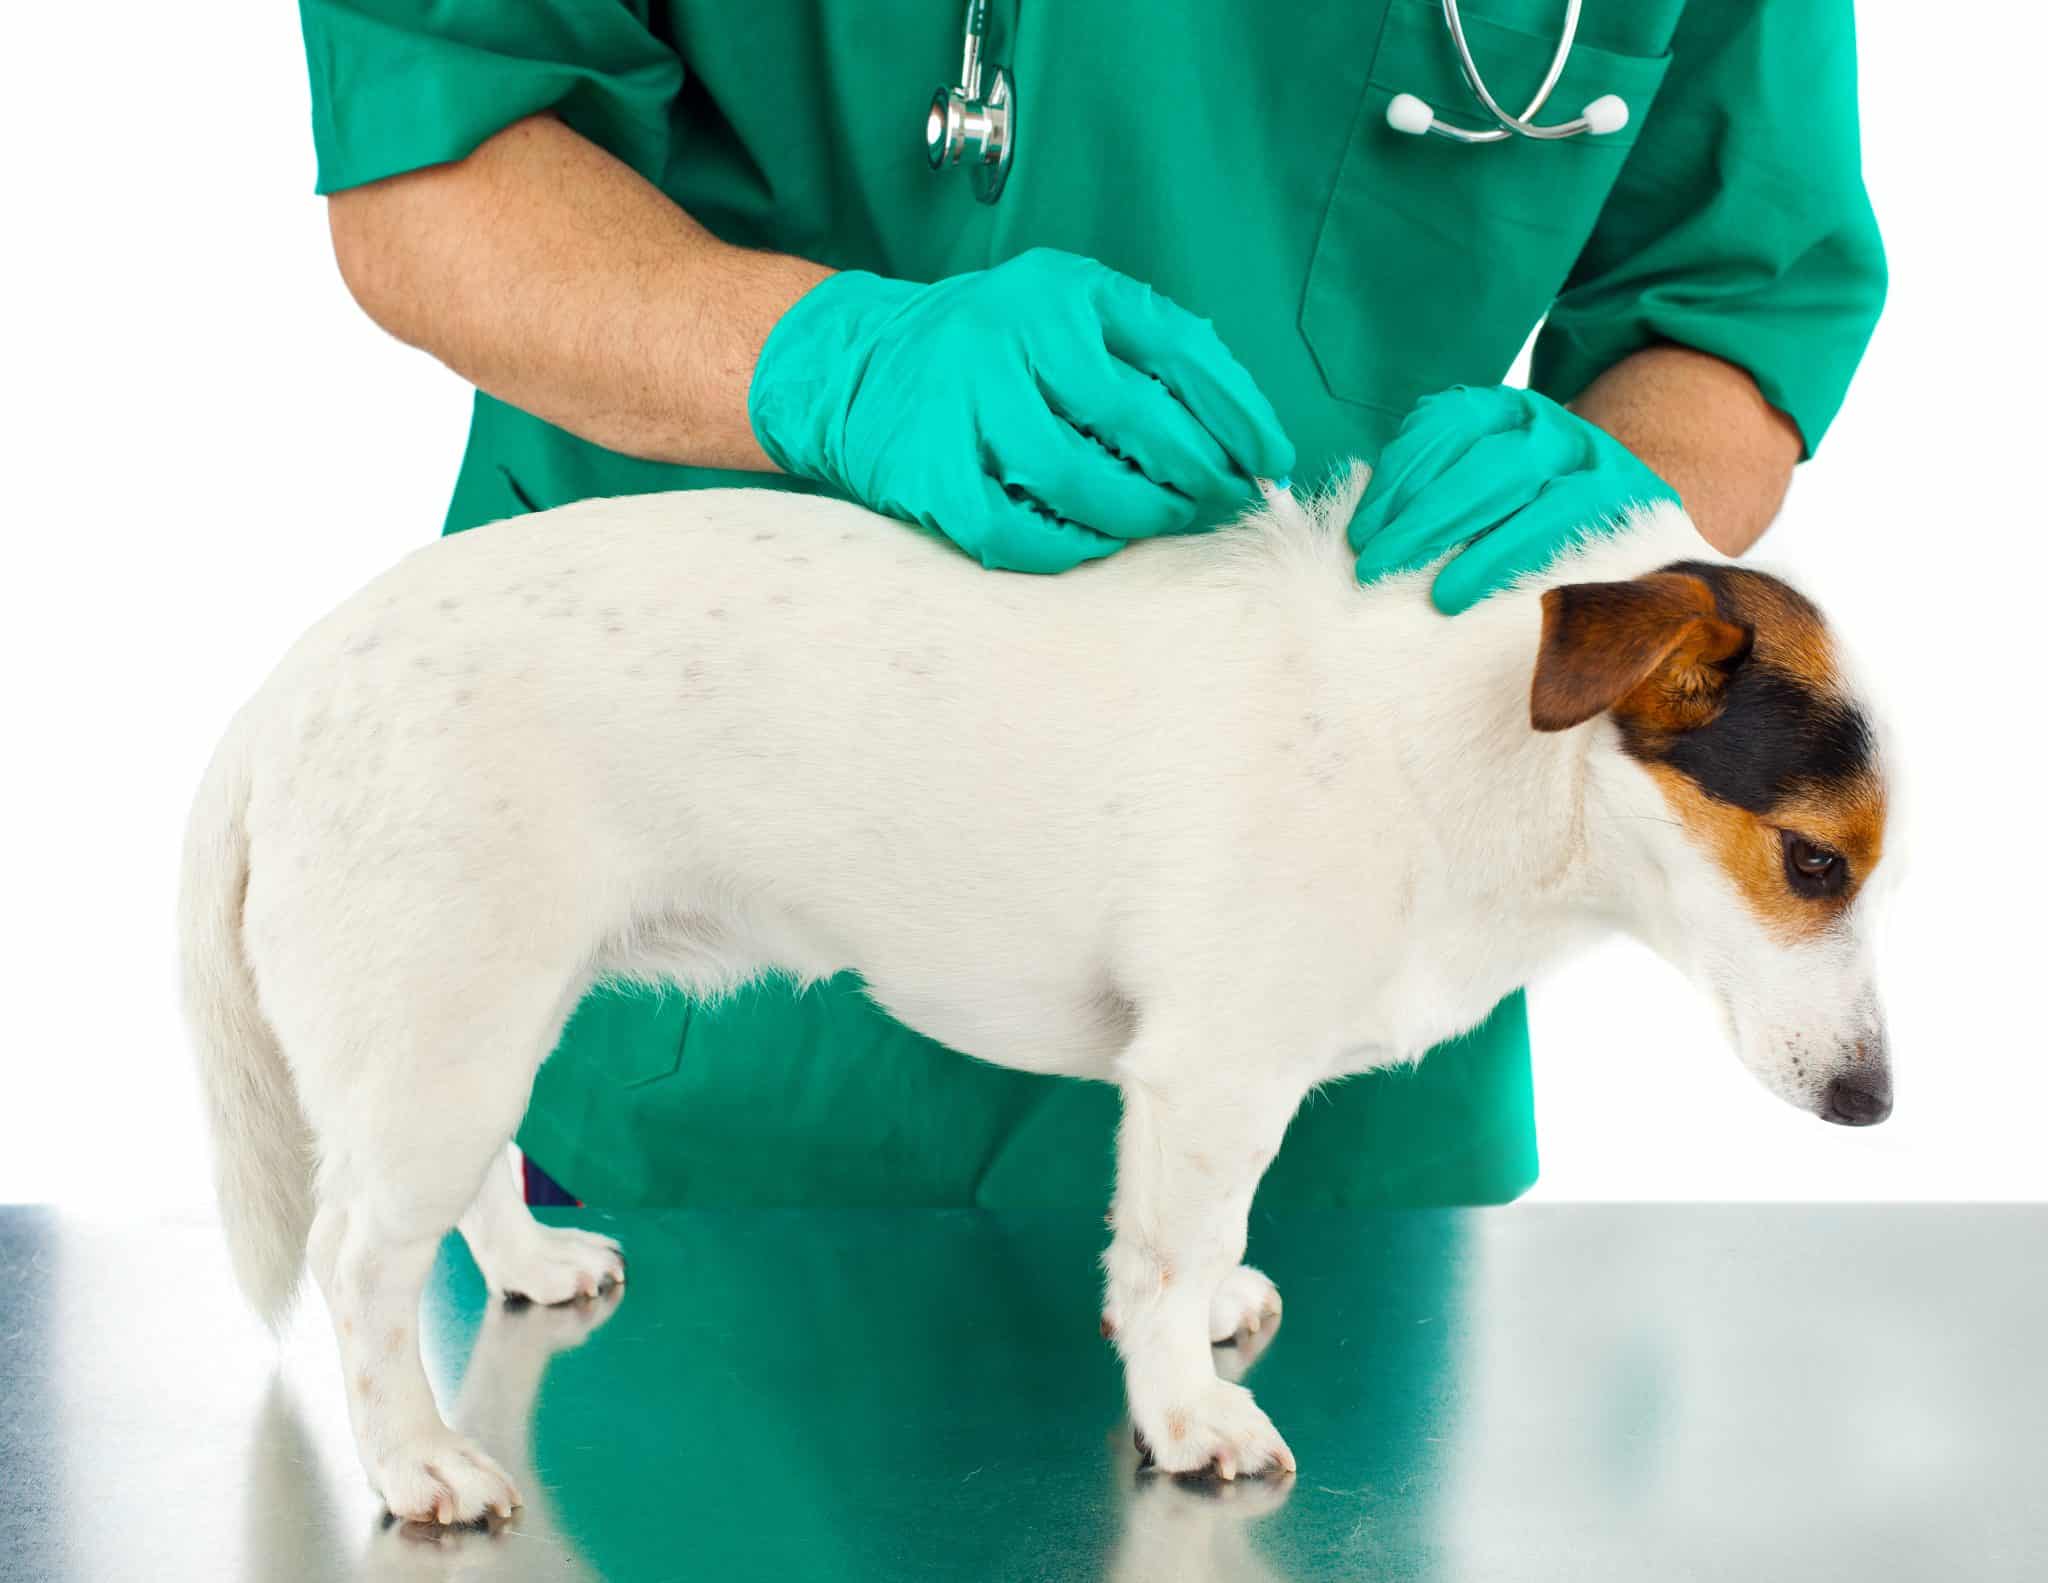 dog receiving flea treatment at vet's office